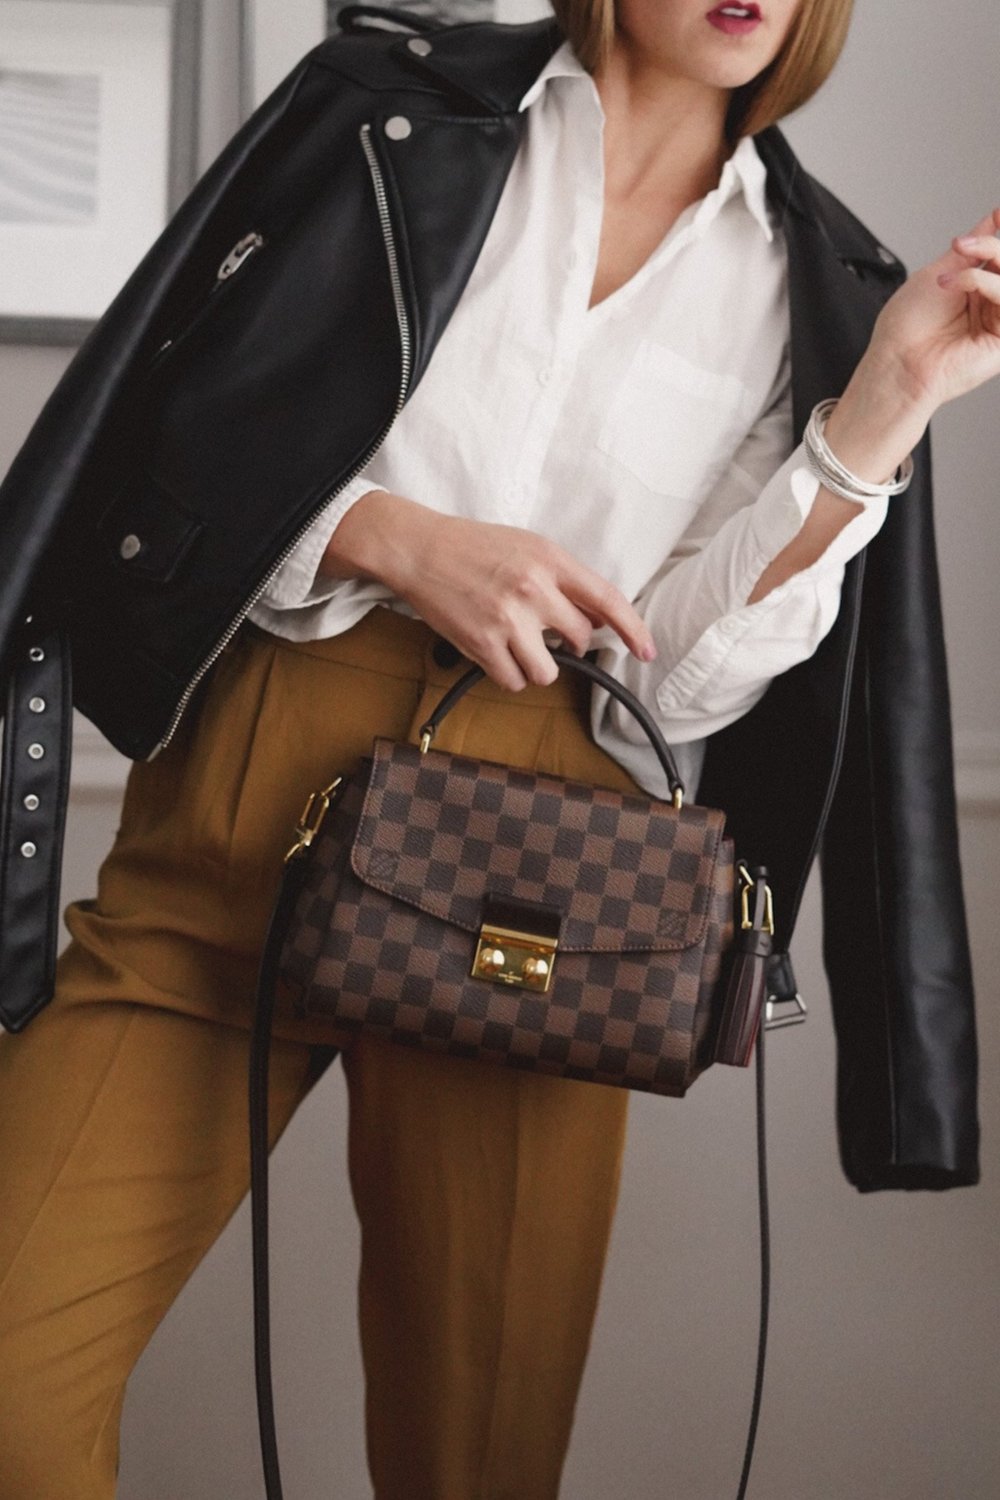  Jessica Ashley wearing white linen blouse, Zara leather jacket, Zara Pants with Louis Vuitton handbag | outfit details 